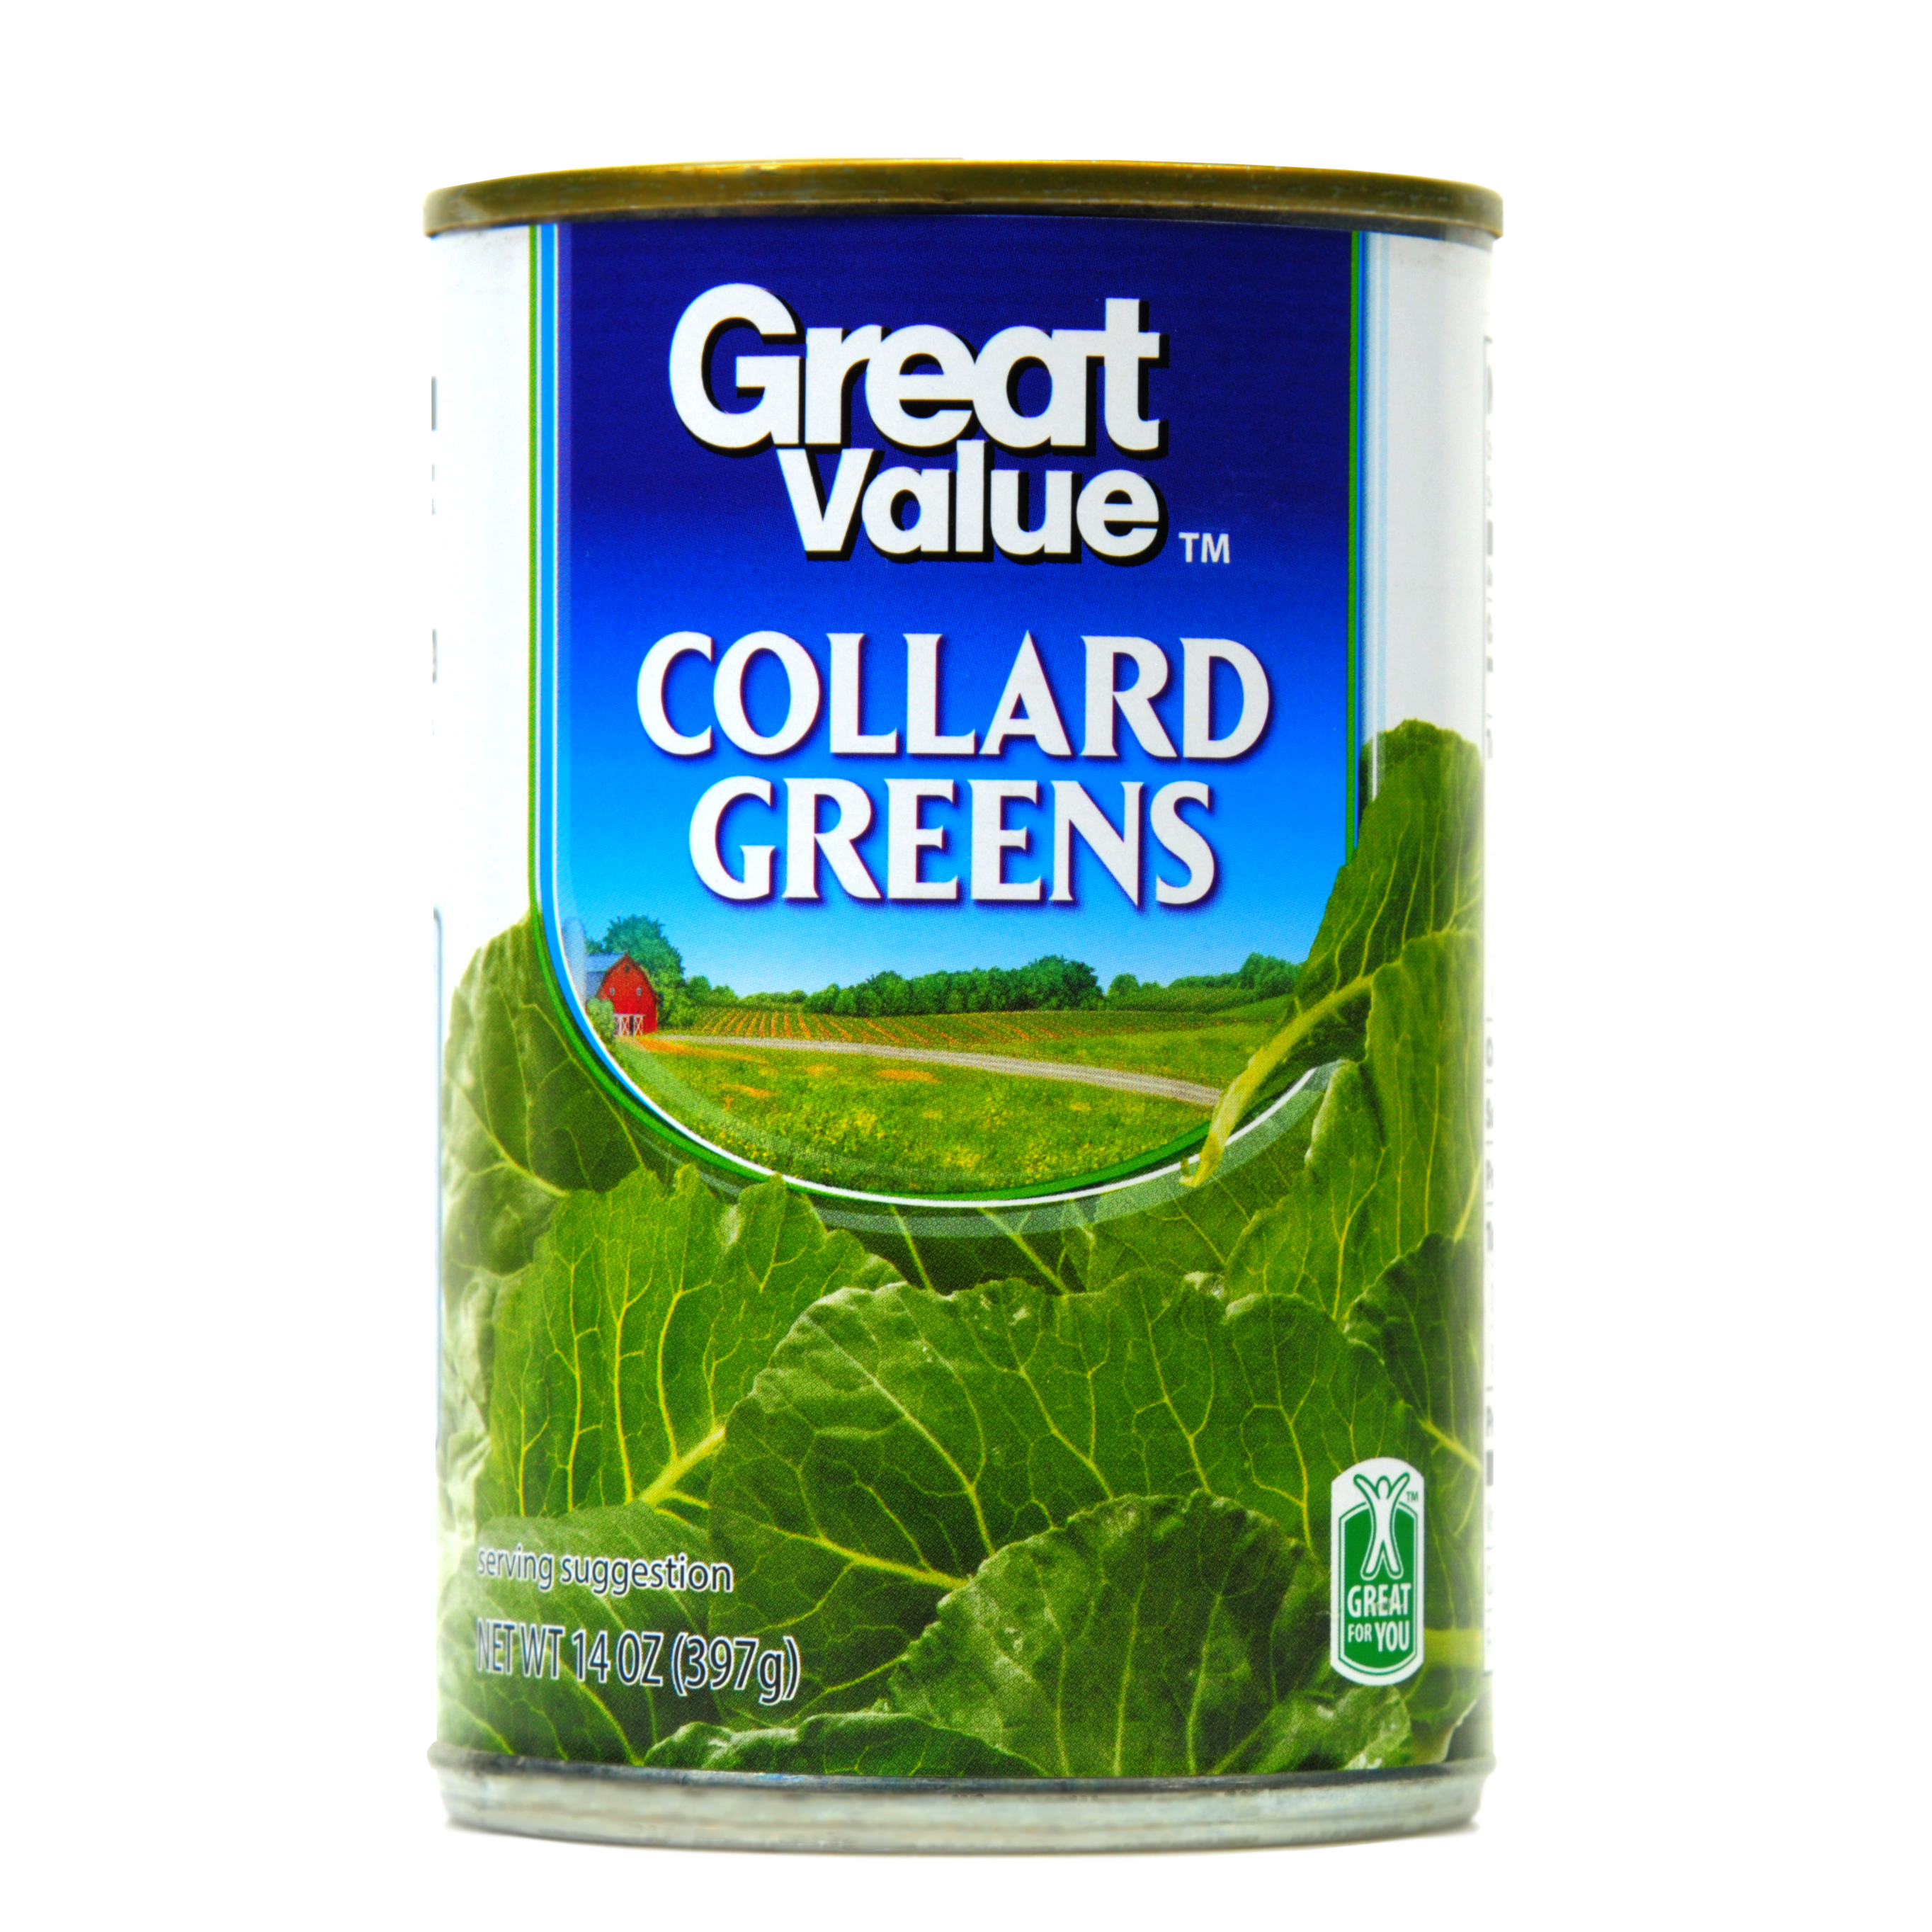 Great Value Collard Greens, 14 Oz Image